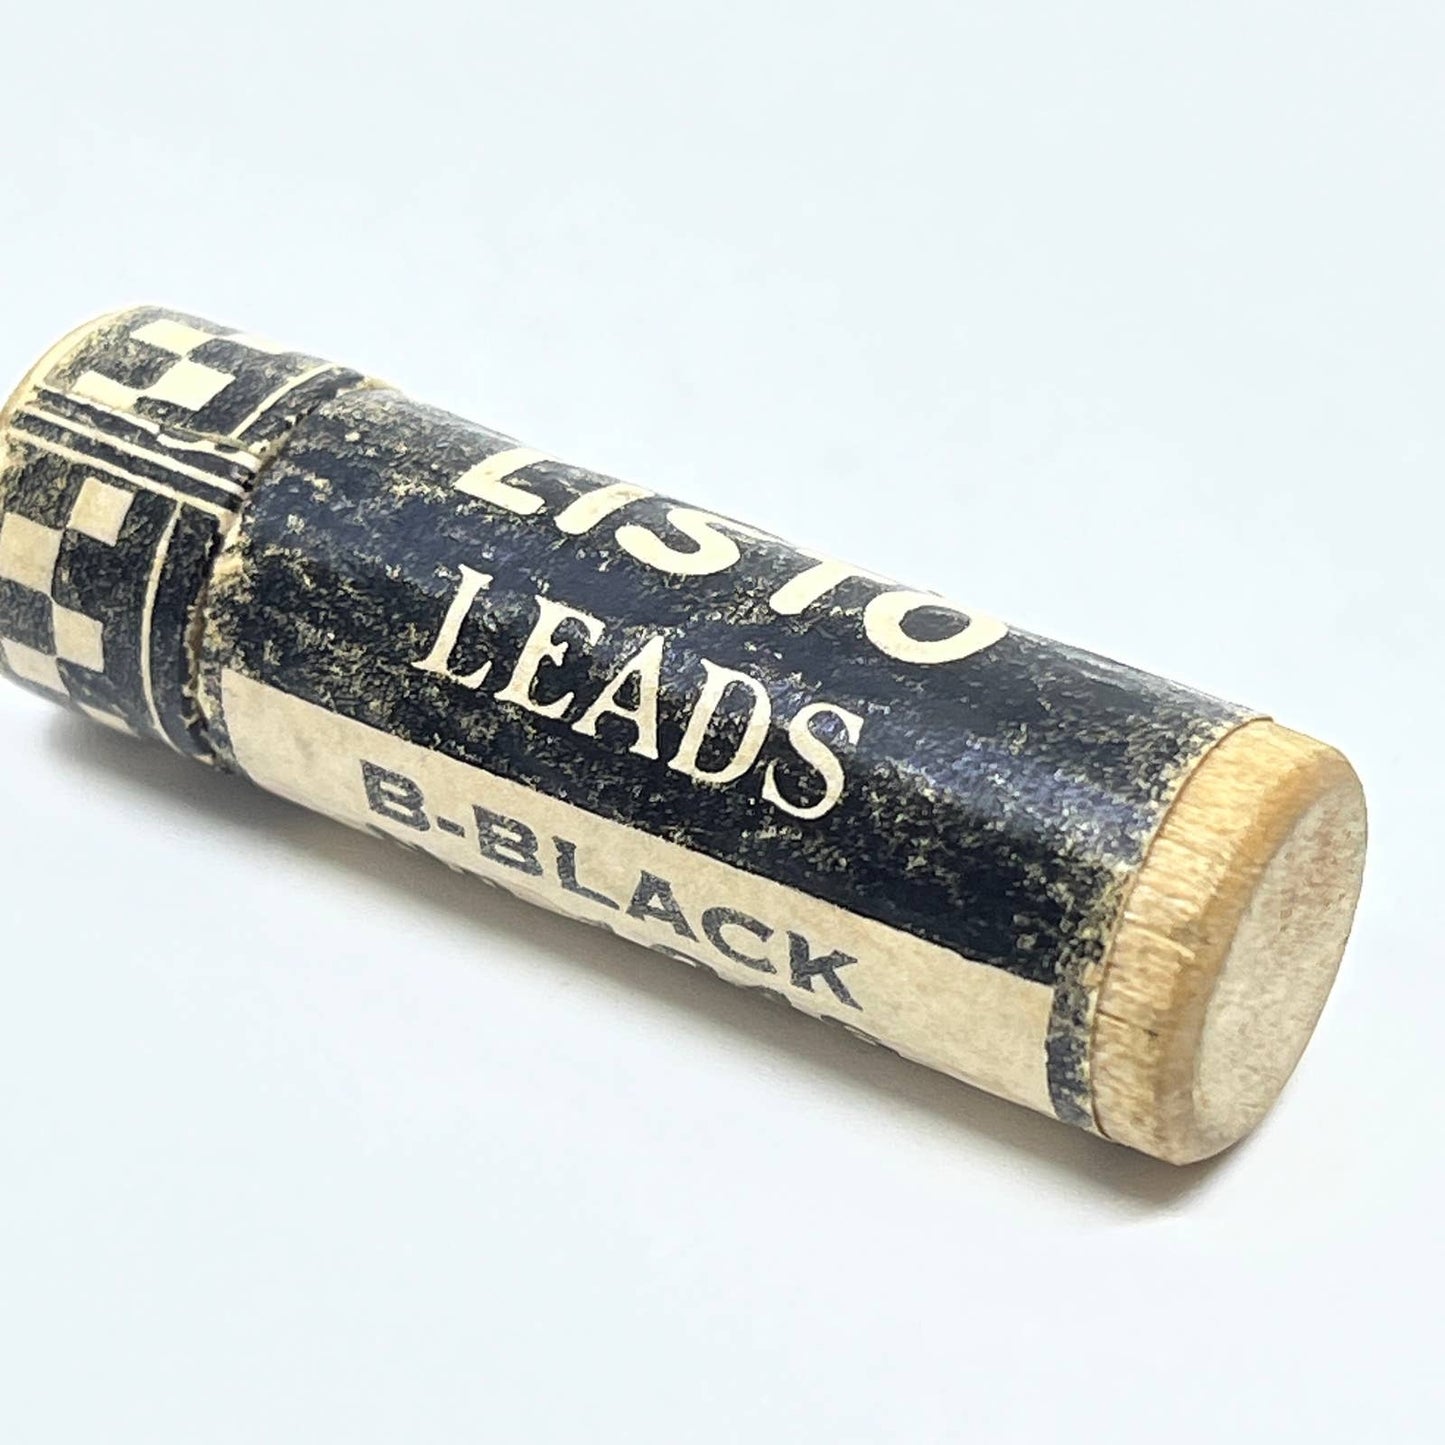 NOS Wood Tube Listo Mechanical Pencil Leads Black No. 1246 Standard 046 Thin SD8